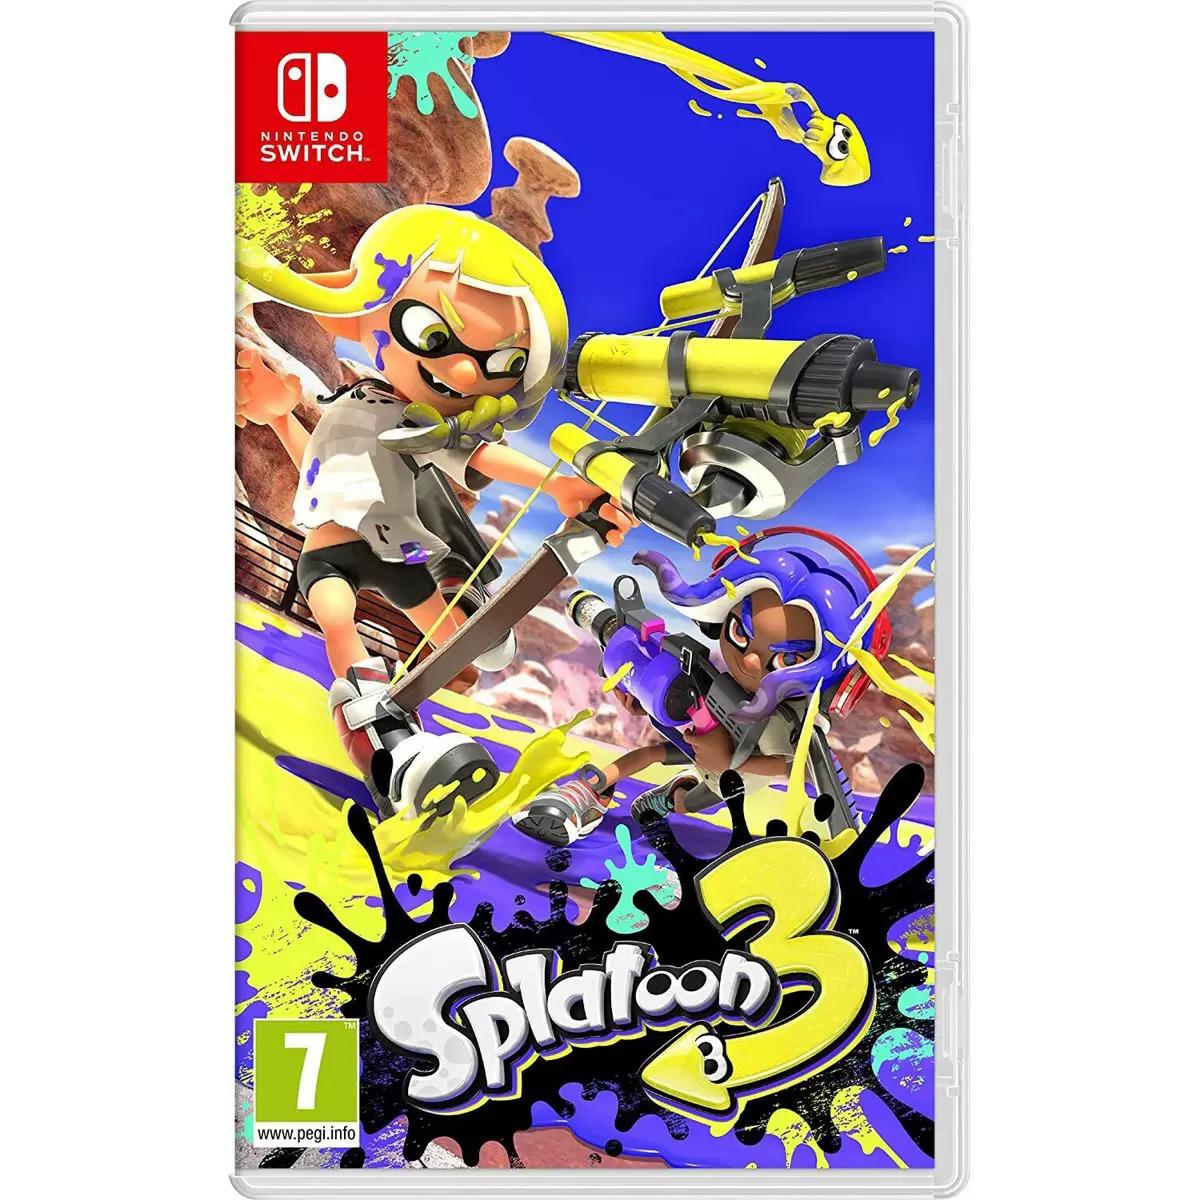 Splatoon 3 Nintendo Switch for $44.99 Shipped